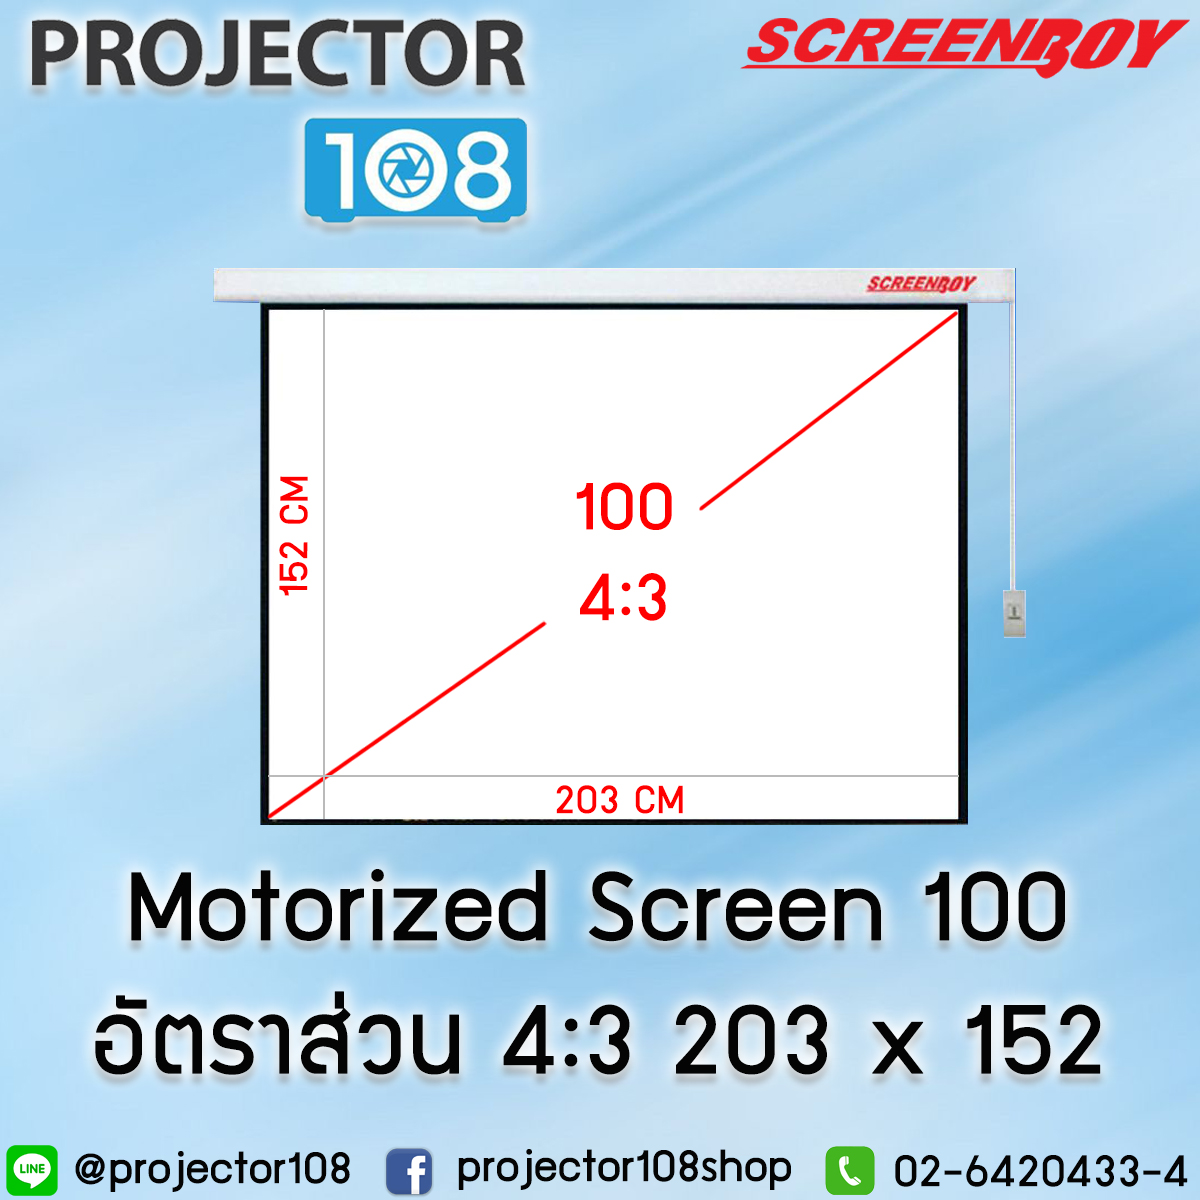 Screenboy Motor Projection Screen (100 Inch Diag 4:3) จอภาพแบบมอเตอร์ไฟฟ้าอัตราส่วน 4:3, ขนาด 212 x 160 cm (100 4:3)